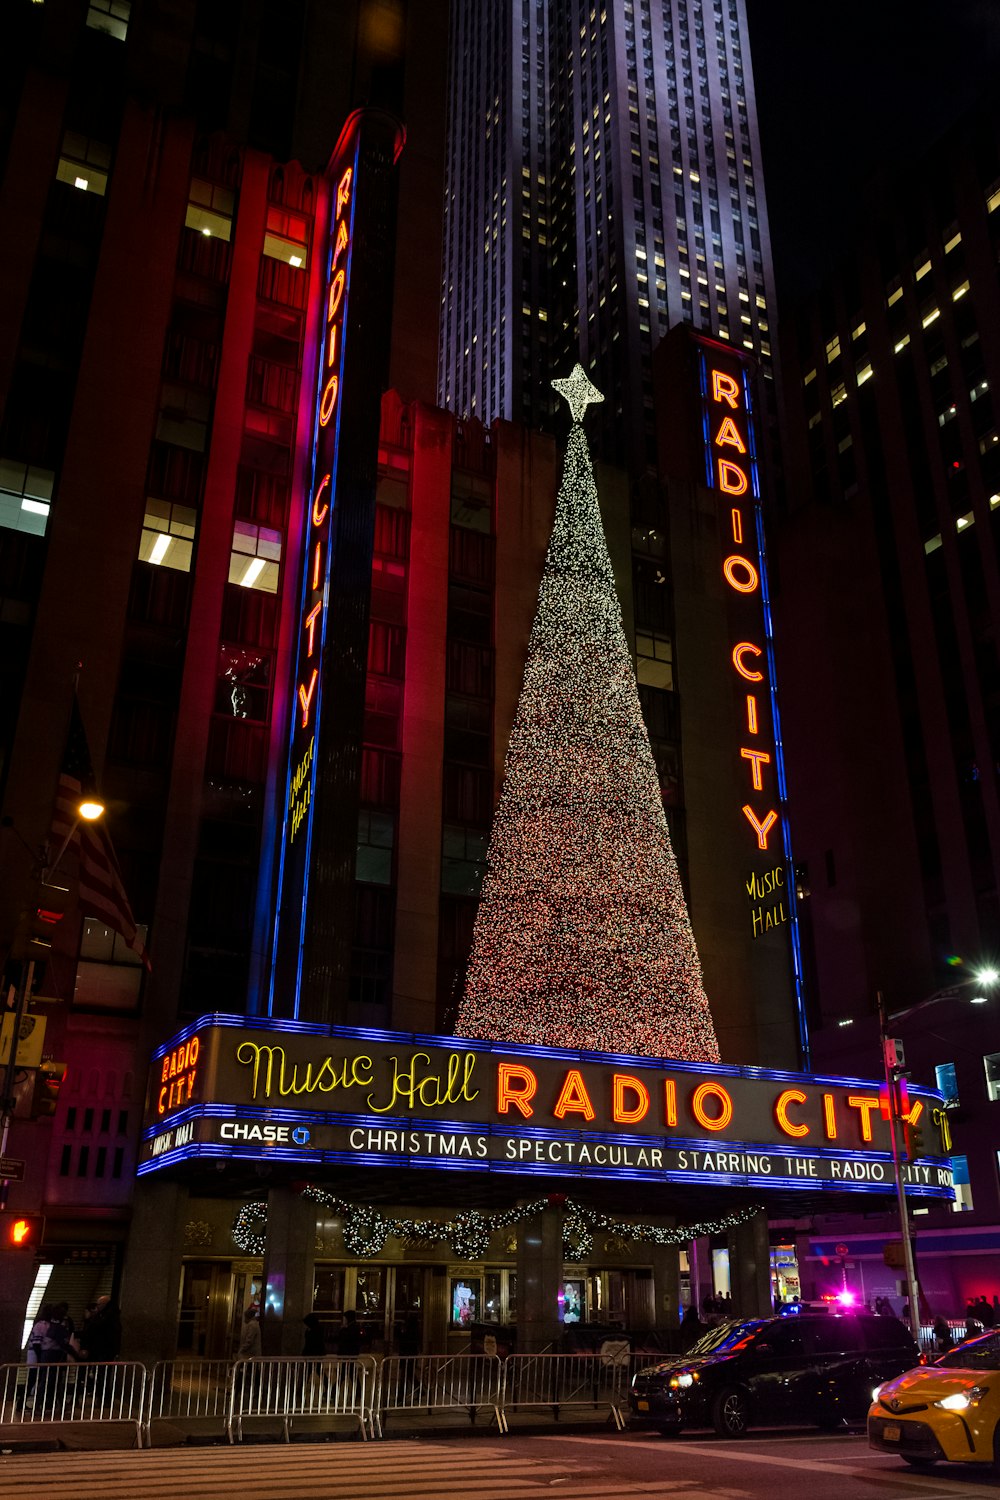 the radio city christmas tree is lit up at night